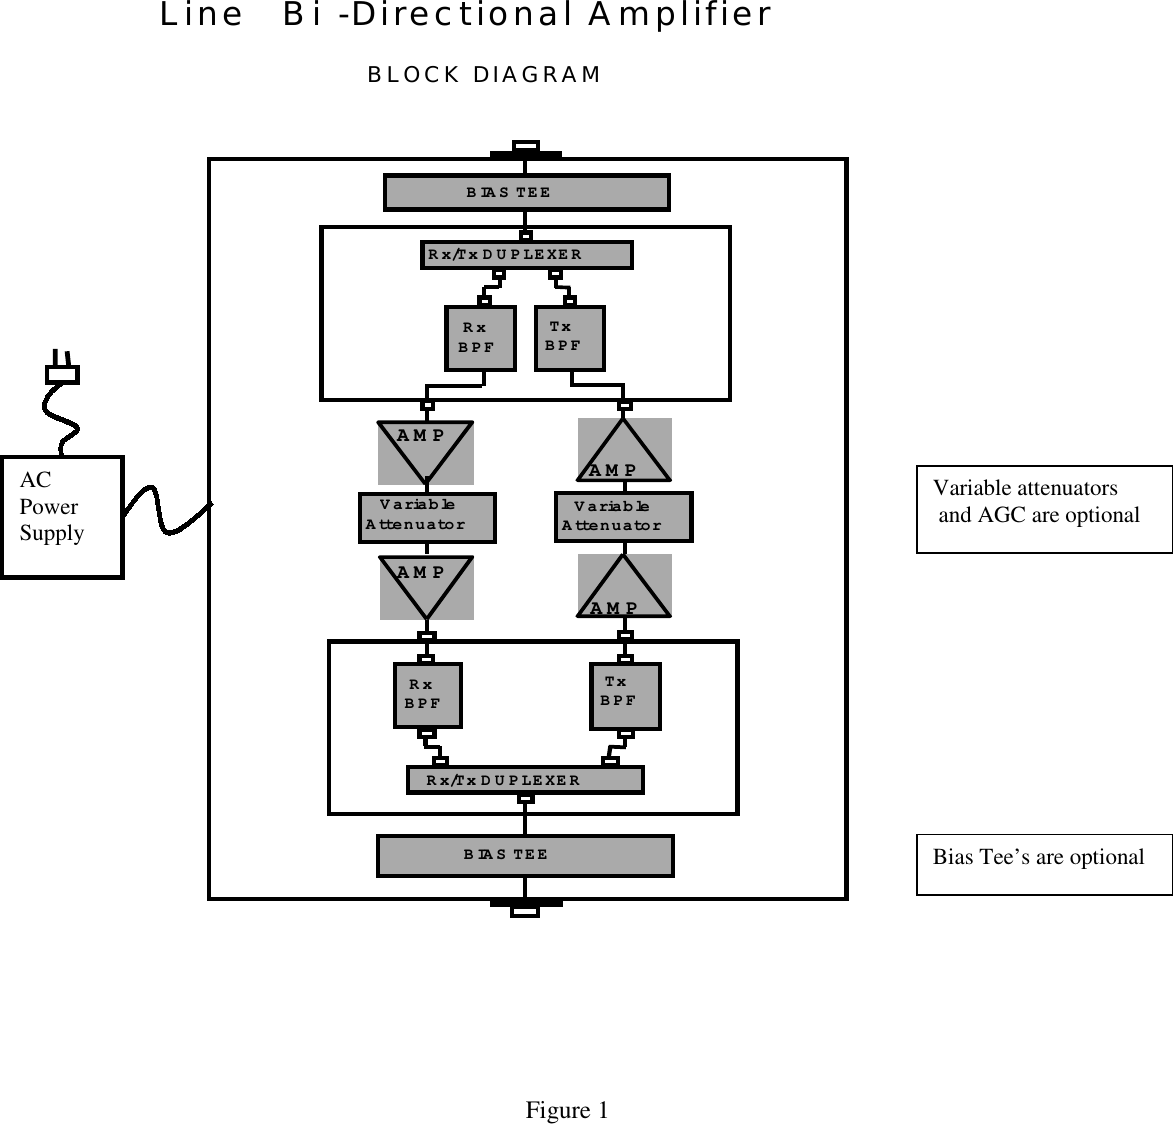                                                           Figure 1Line  Bi -Directional AmplifierBLOCK DIAGRAMRx/Tx DUPLEXER RxBPFTxBPFRx/Tx DUPLEXERBIAS TEE  Rx BPFTxBPFBIAS TEEAMPAMPVariableAttenuatorAMPAMPVariableAttenuatorVariable attenuators and AGC are optionalACPowerSupplyBias Tee’s are optional